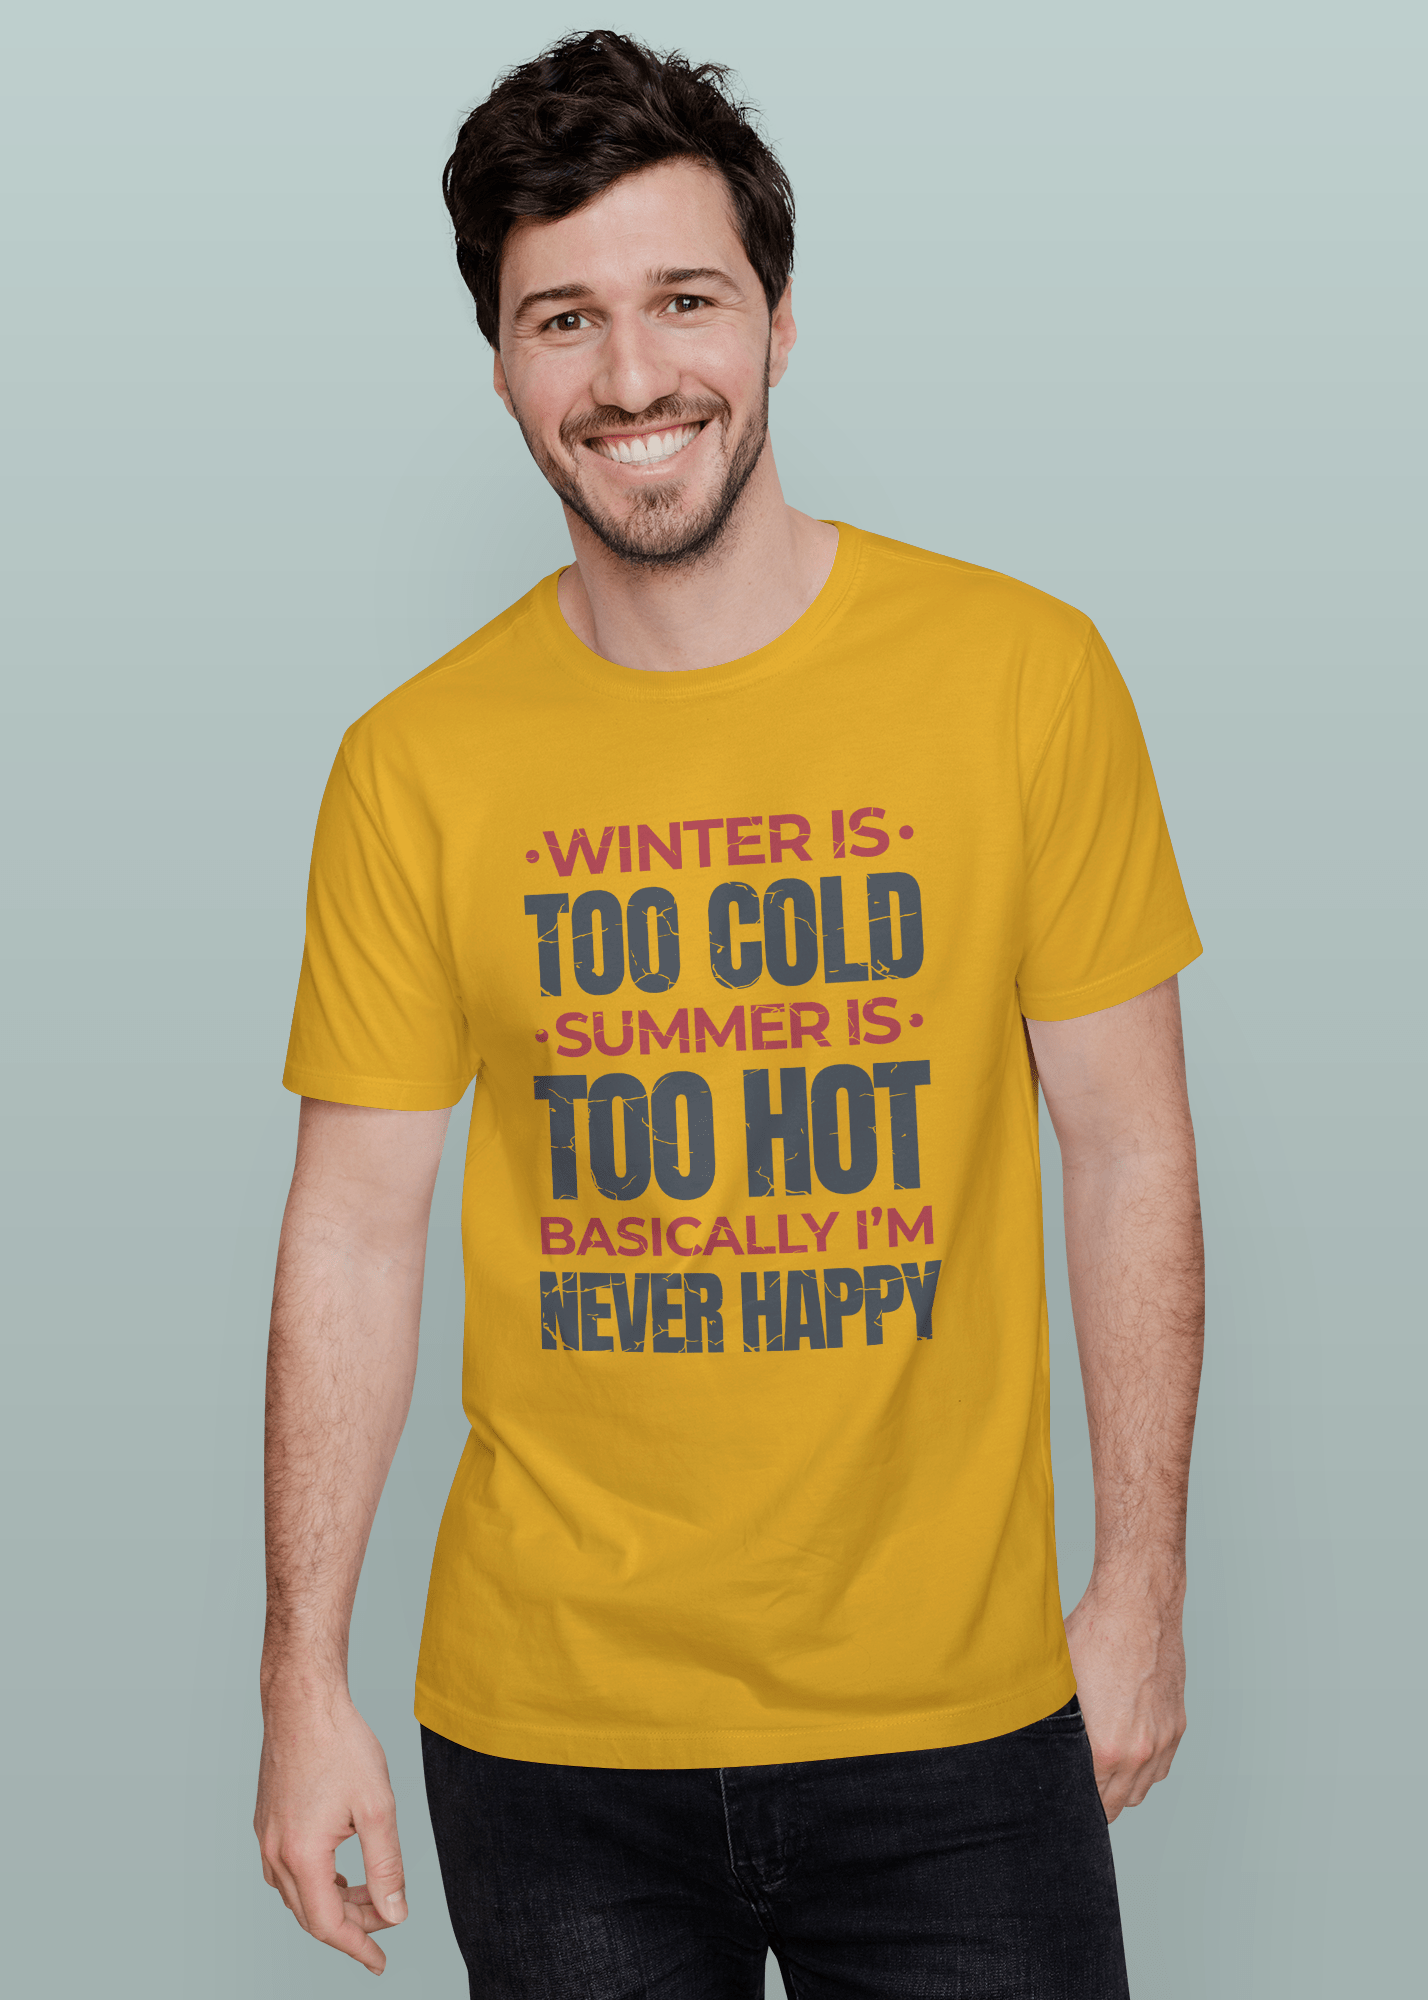 I'm Never Happy Printed Half Sleeve Premium Cotton T-shirt For Men